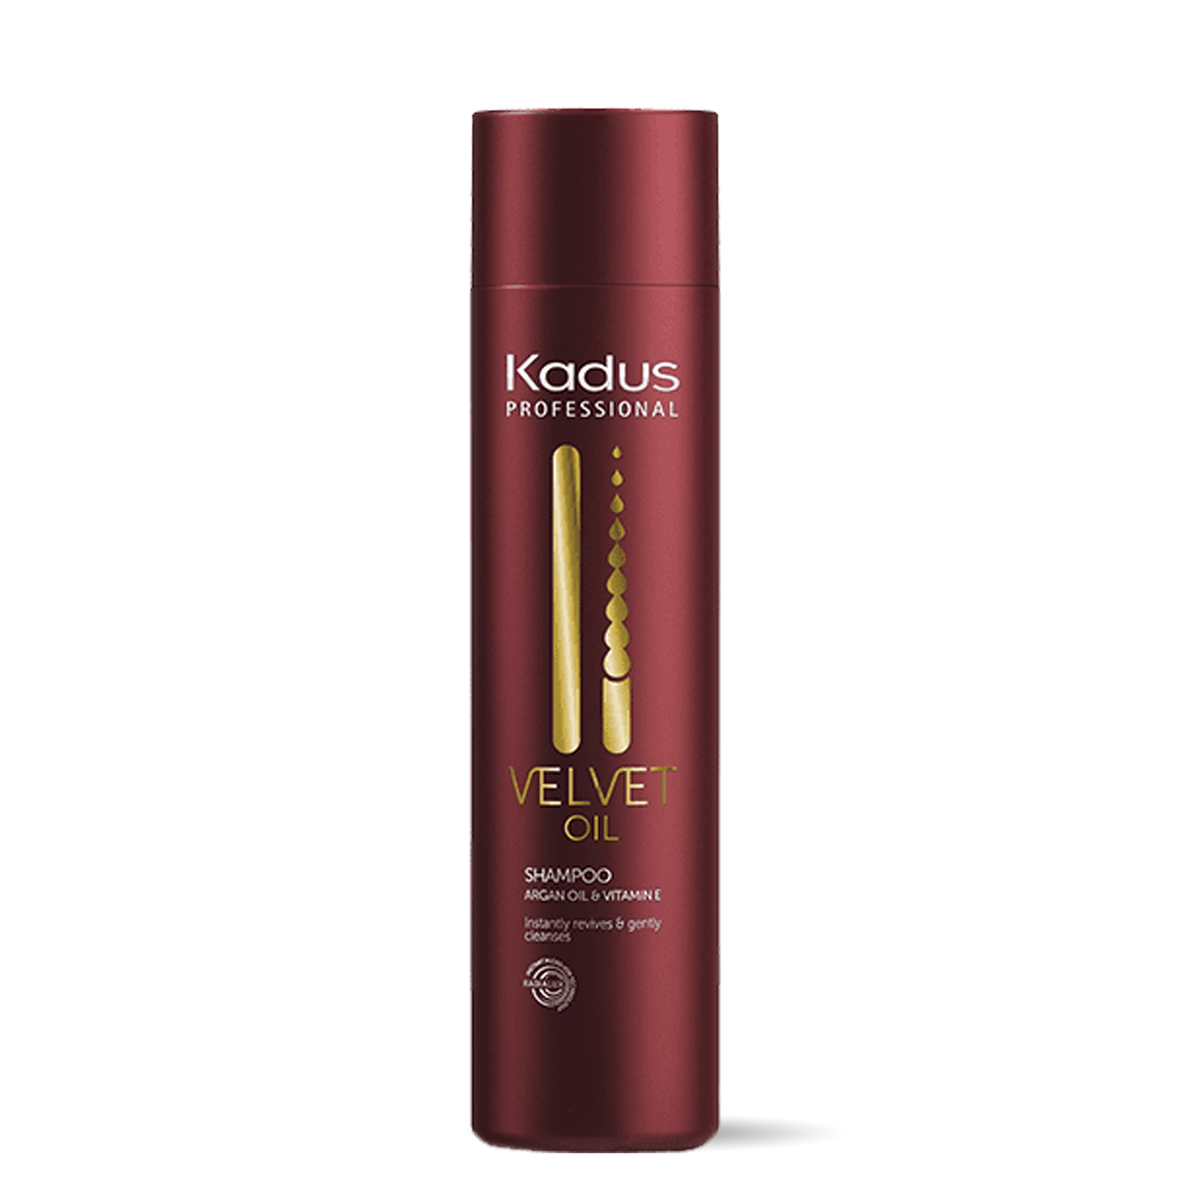 Kadus Velvet Oil Shampoo 250ml - by Kadus Professionals |ProCare Outlet|